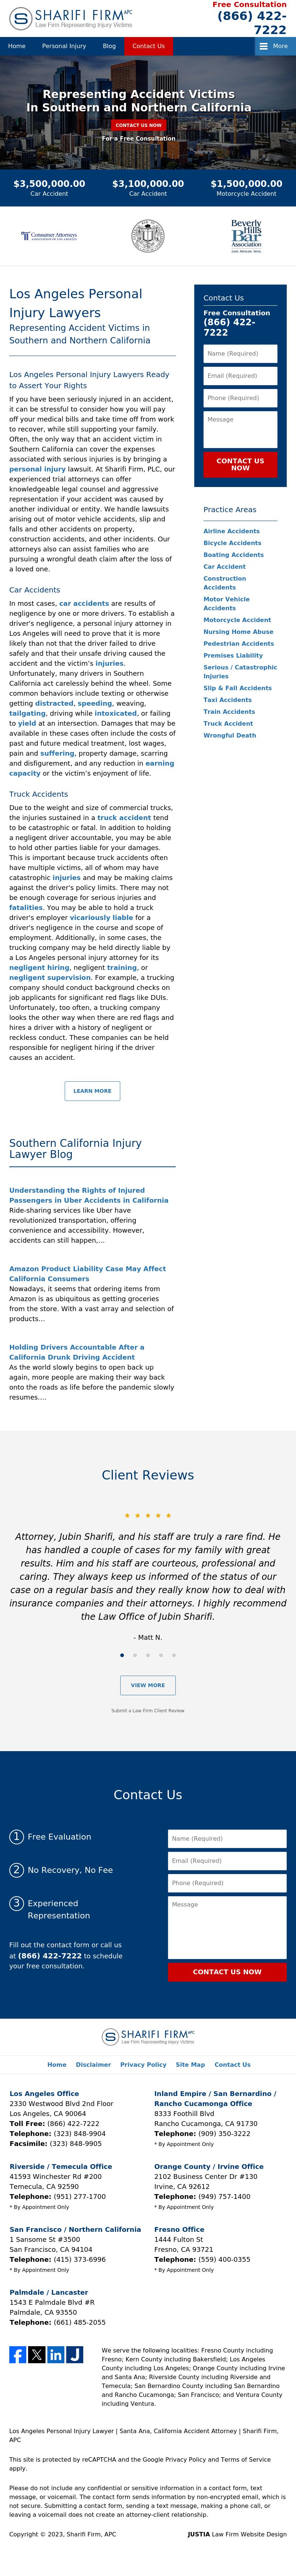 Law Offices of Jubin Sharifi, APLC - Los Angeles CA Lawyers